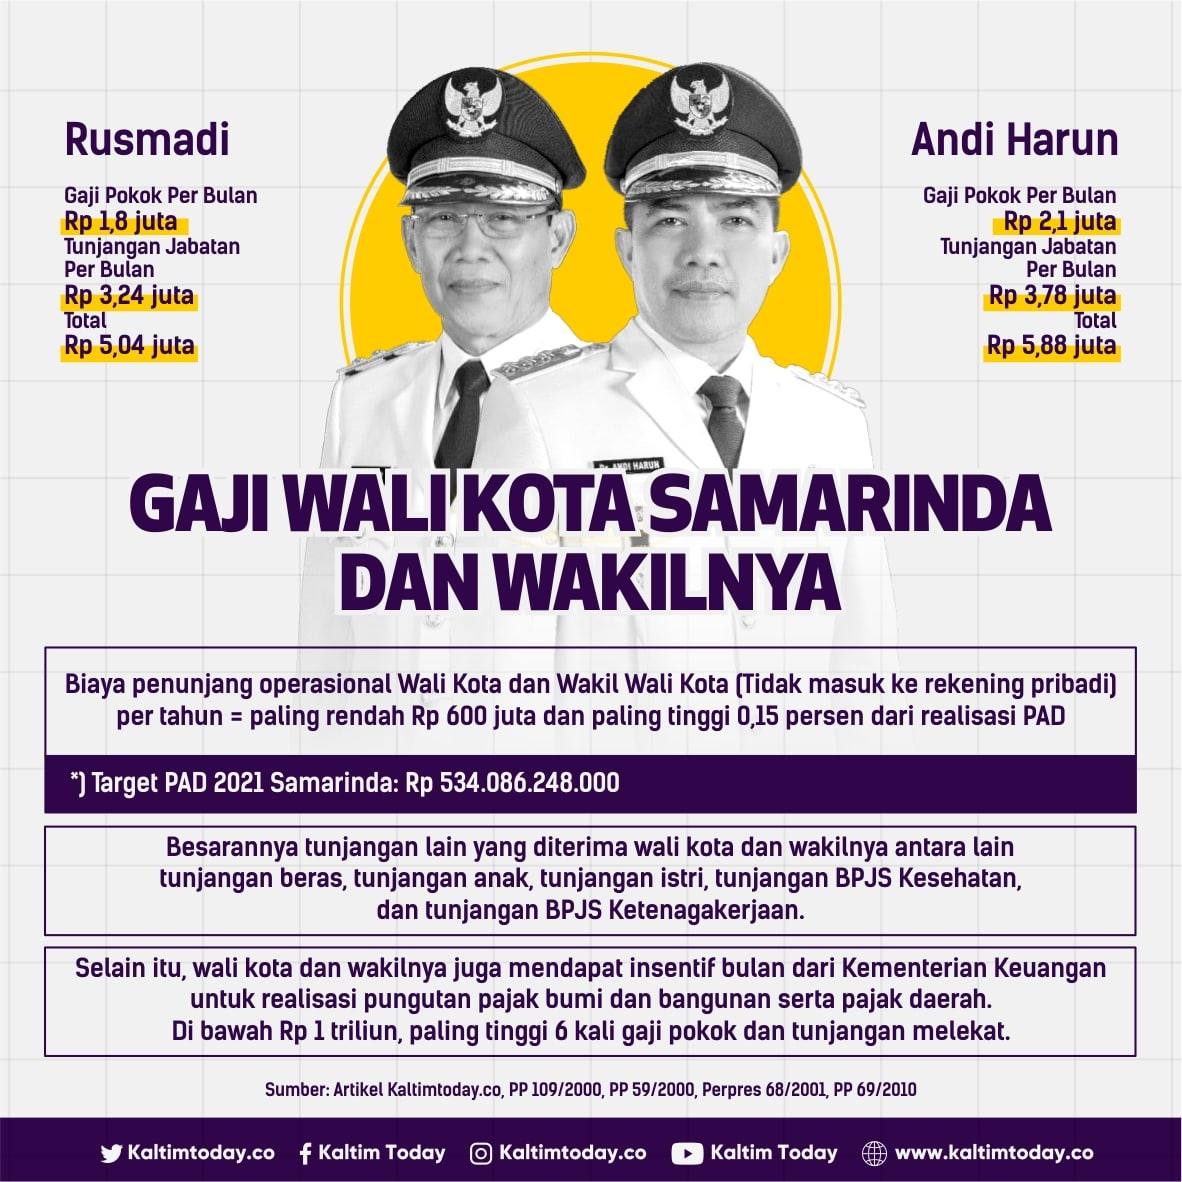 Sudah Dilantik, Berikut Gaji Wali Kota Samarinda Andi Harun dan Wakilnya Rusmadi 